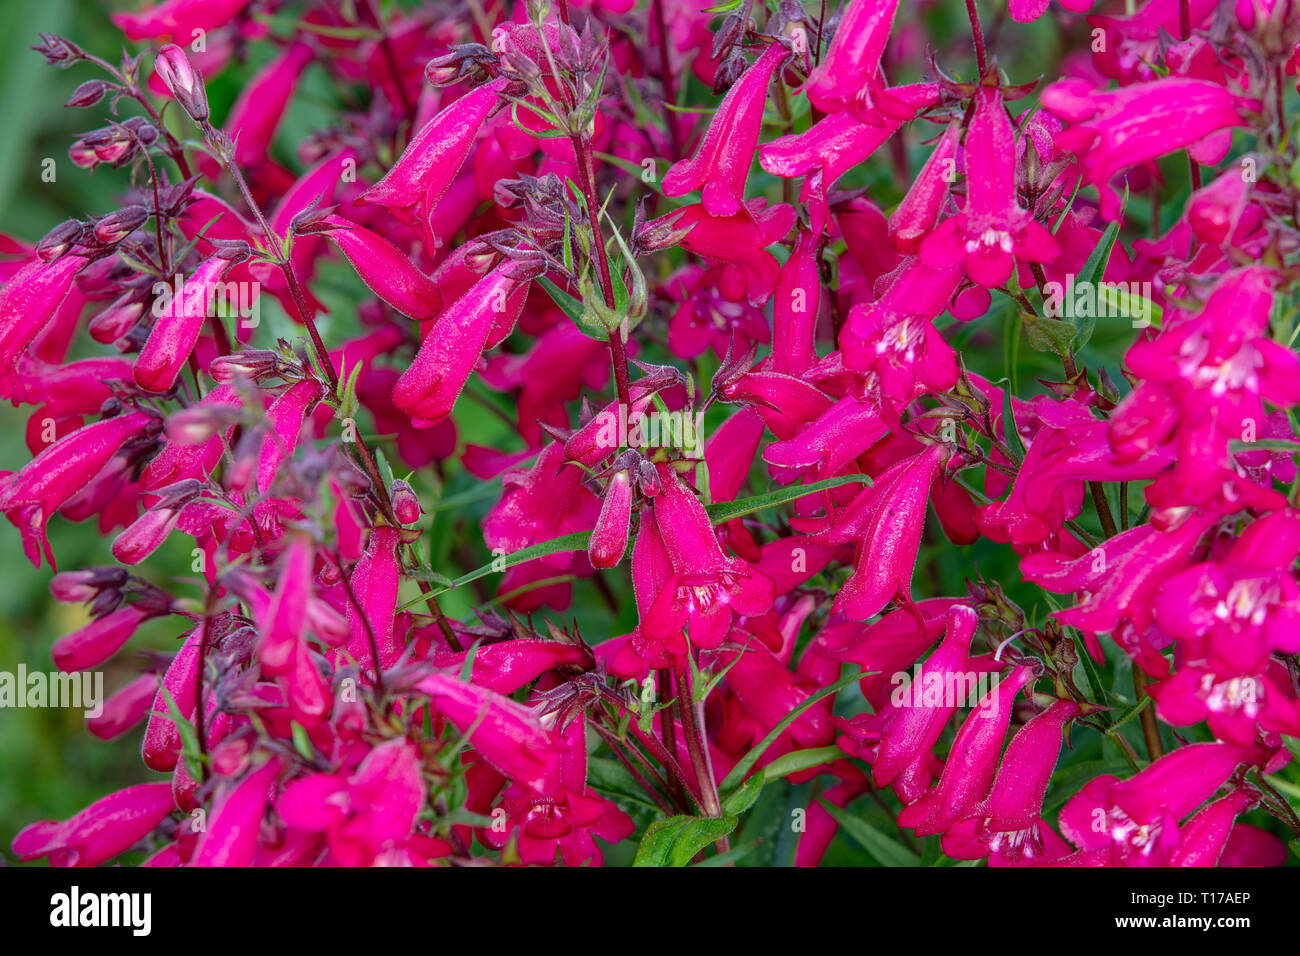 penstemon firebird are long flowering summer perennial plants for